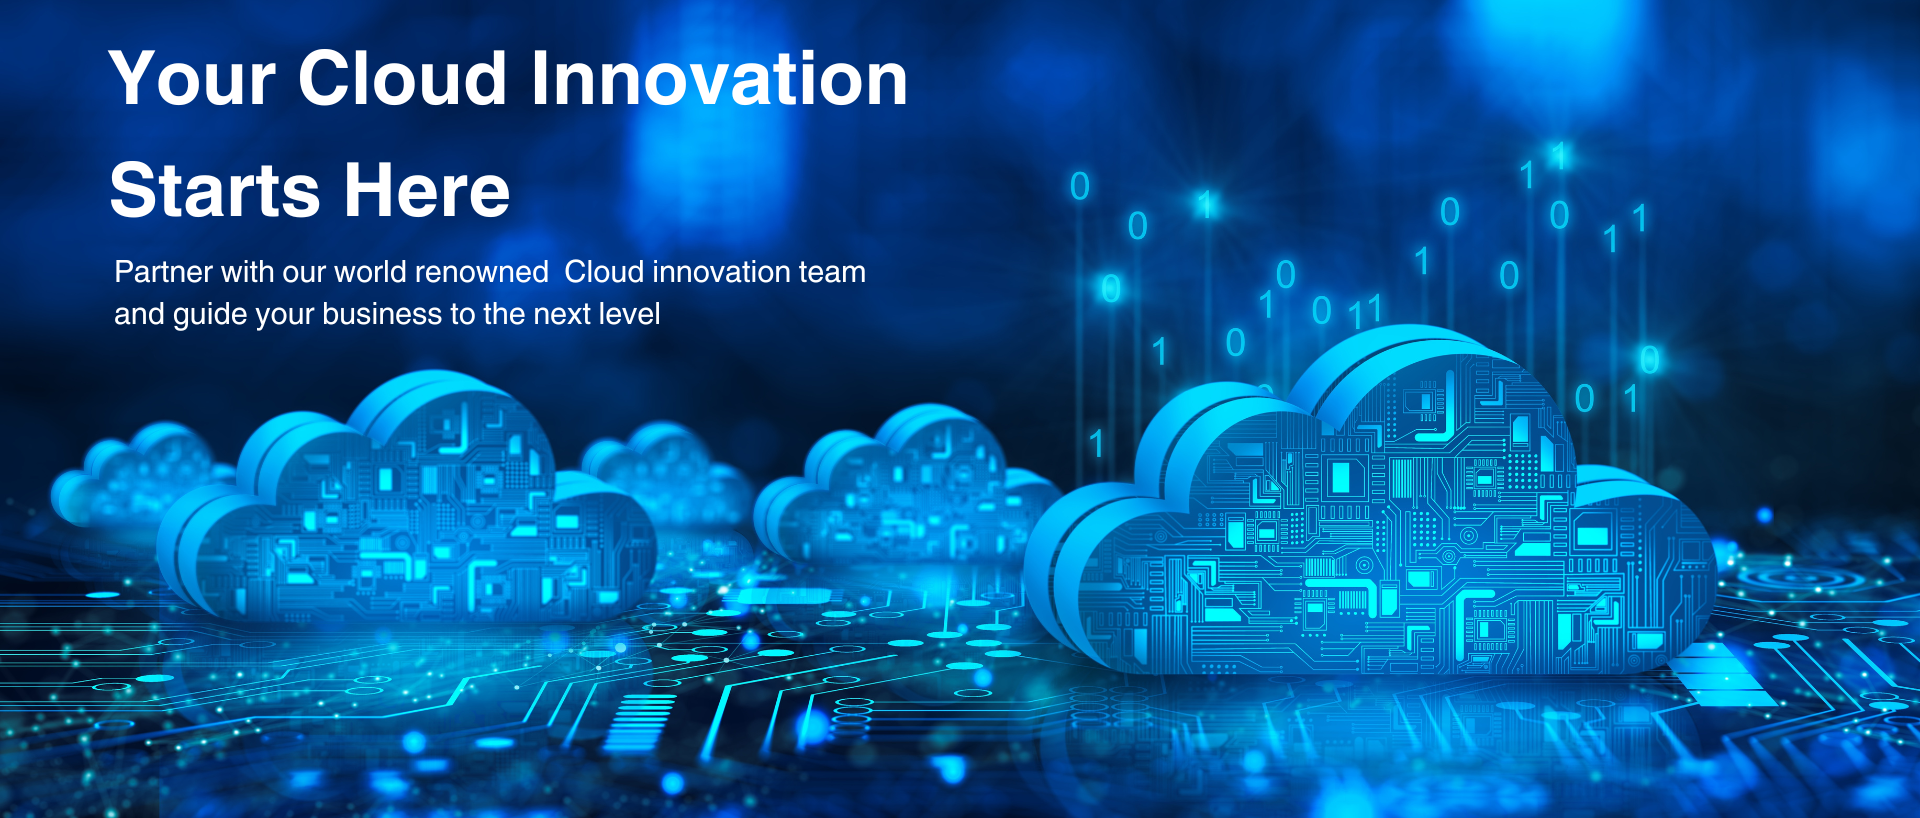 Cloud Innovation Information